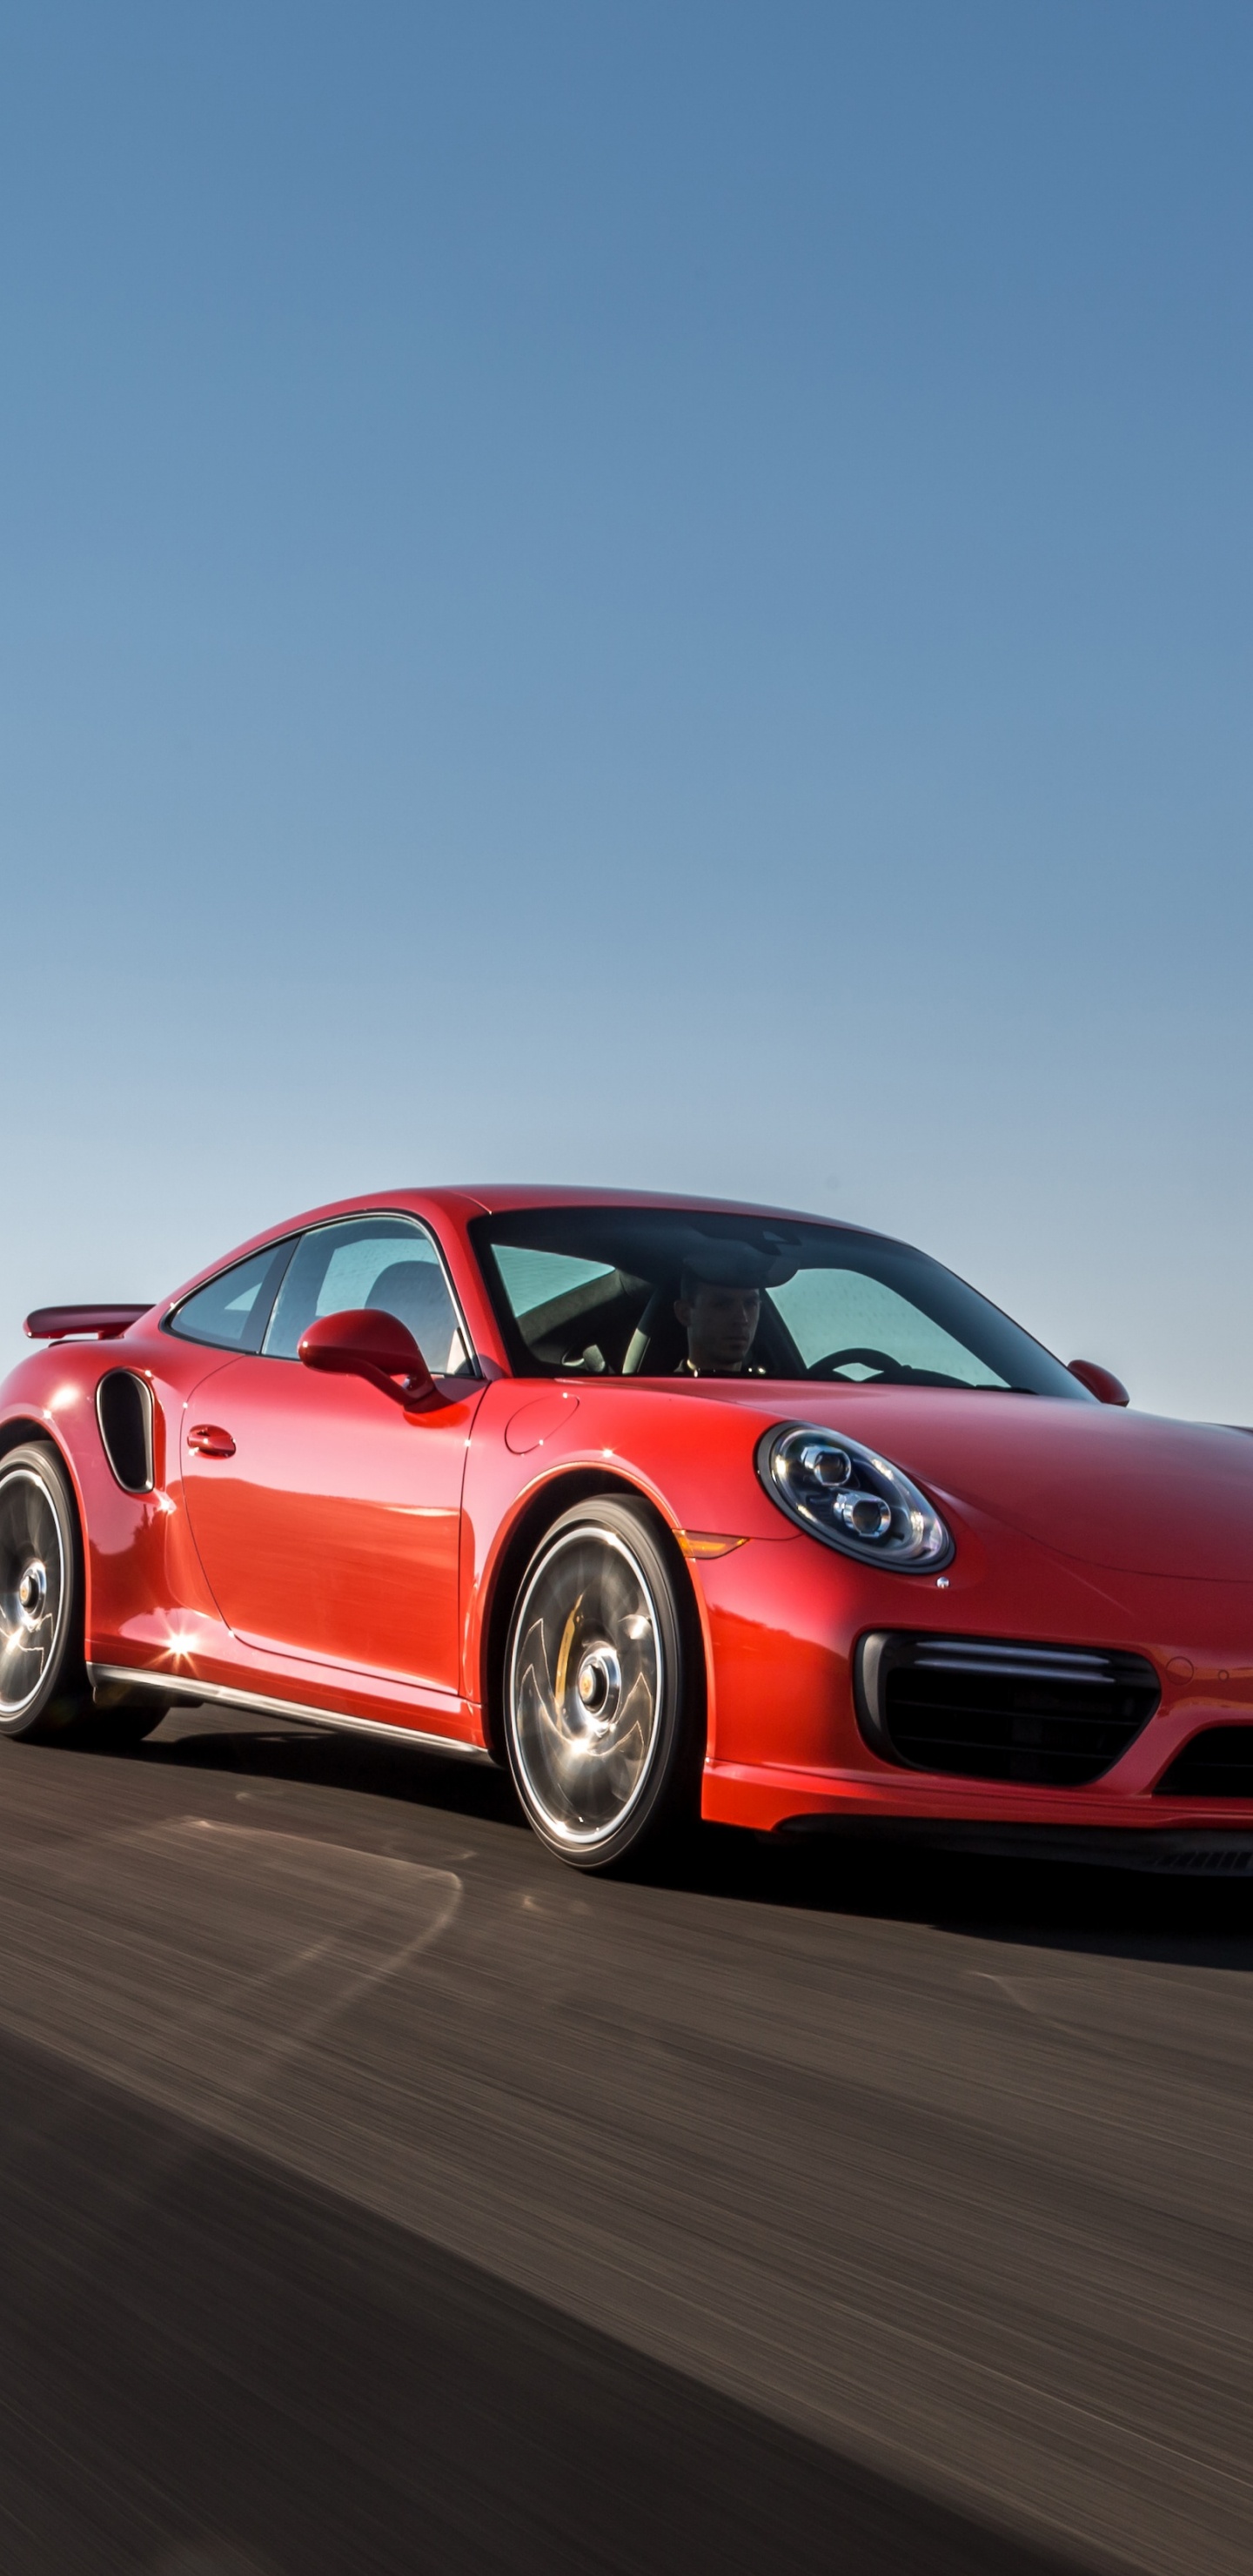 Red Porsche 911 on Road During Daytime. Wallpaper in 1440x2960 Resolution